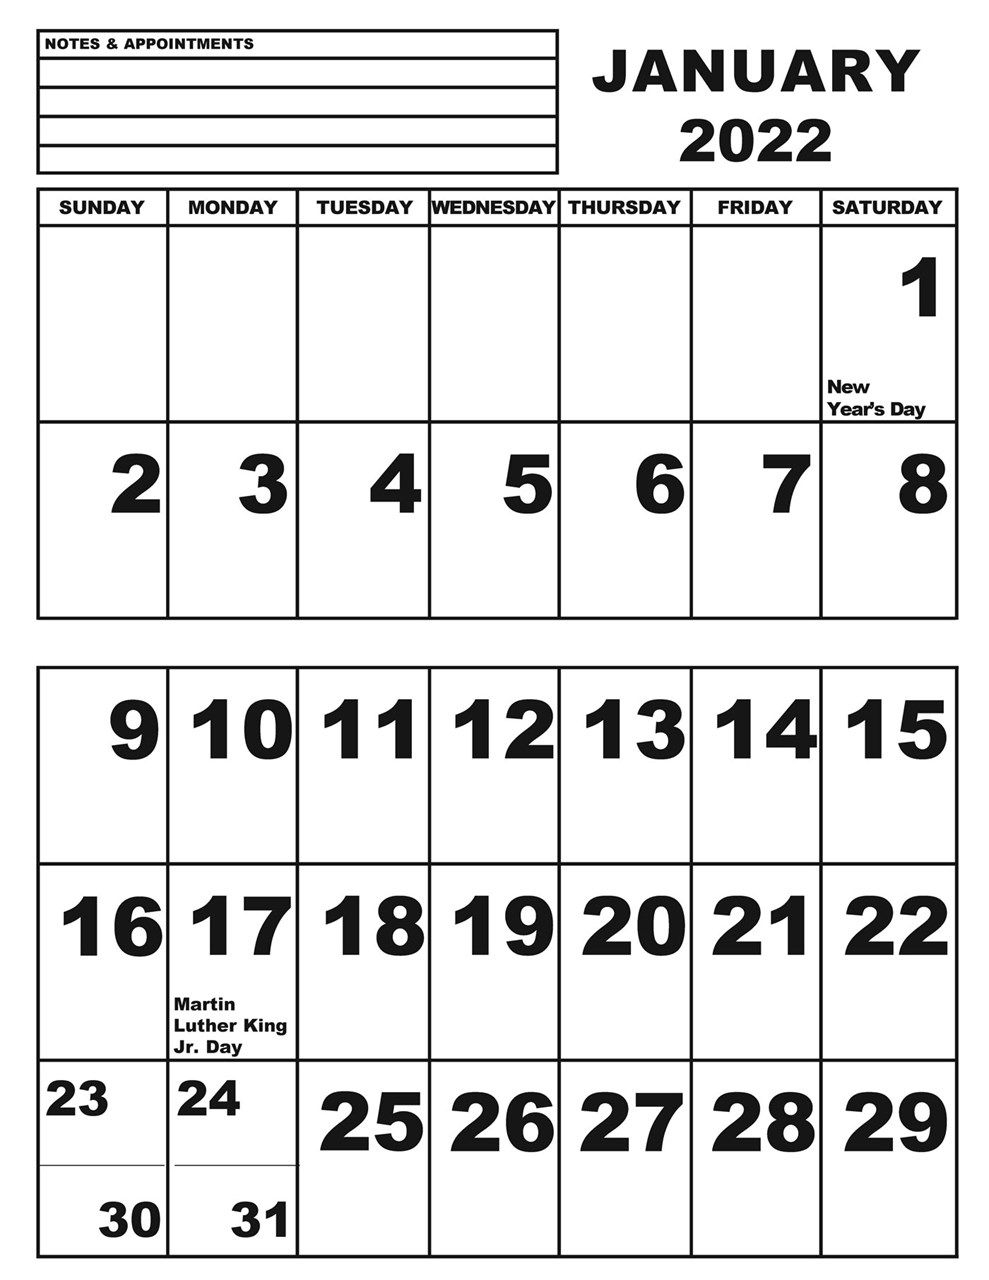 Maxiaids | Jumbo Print Calendar- 2022